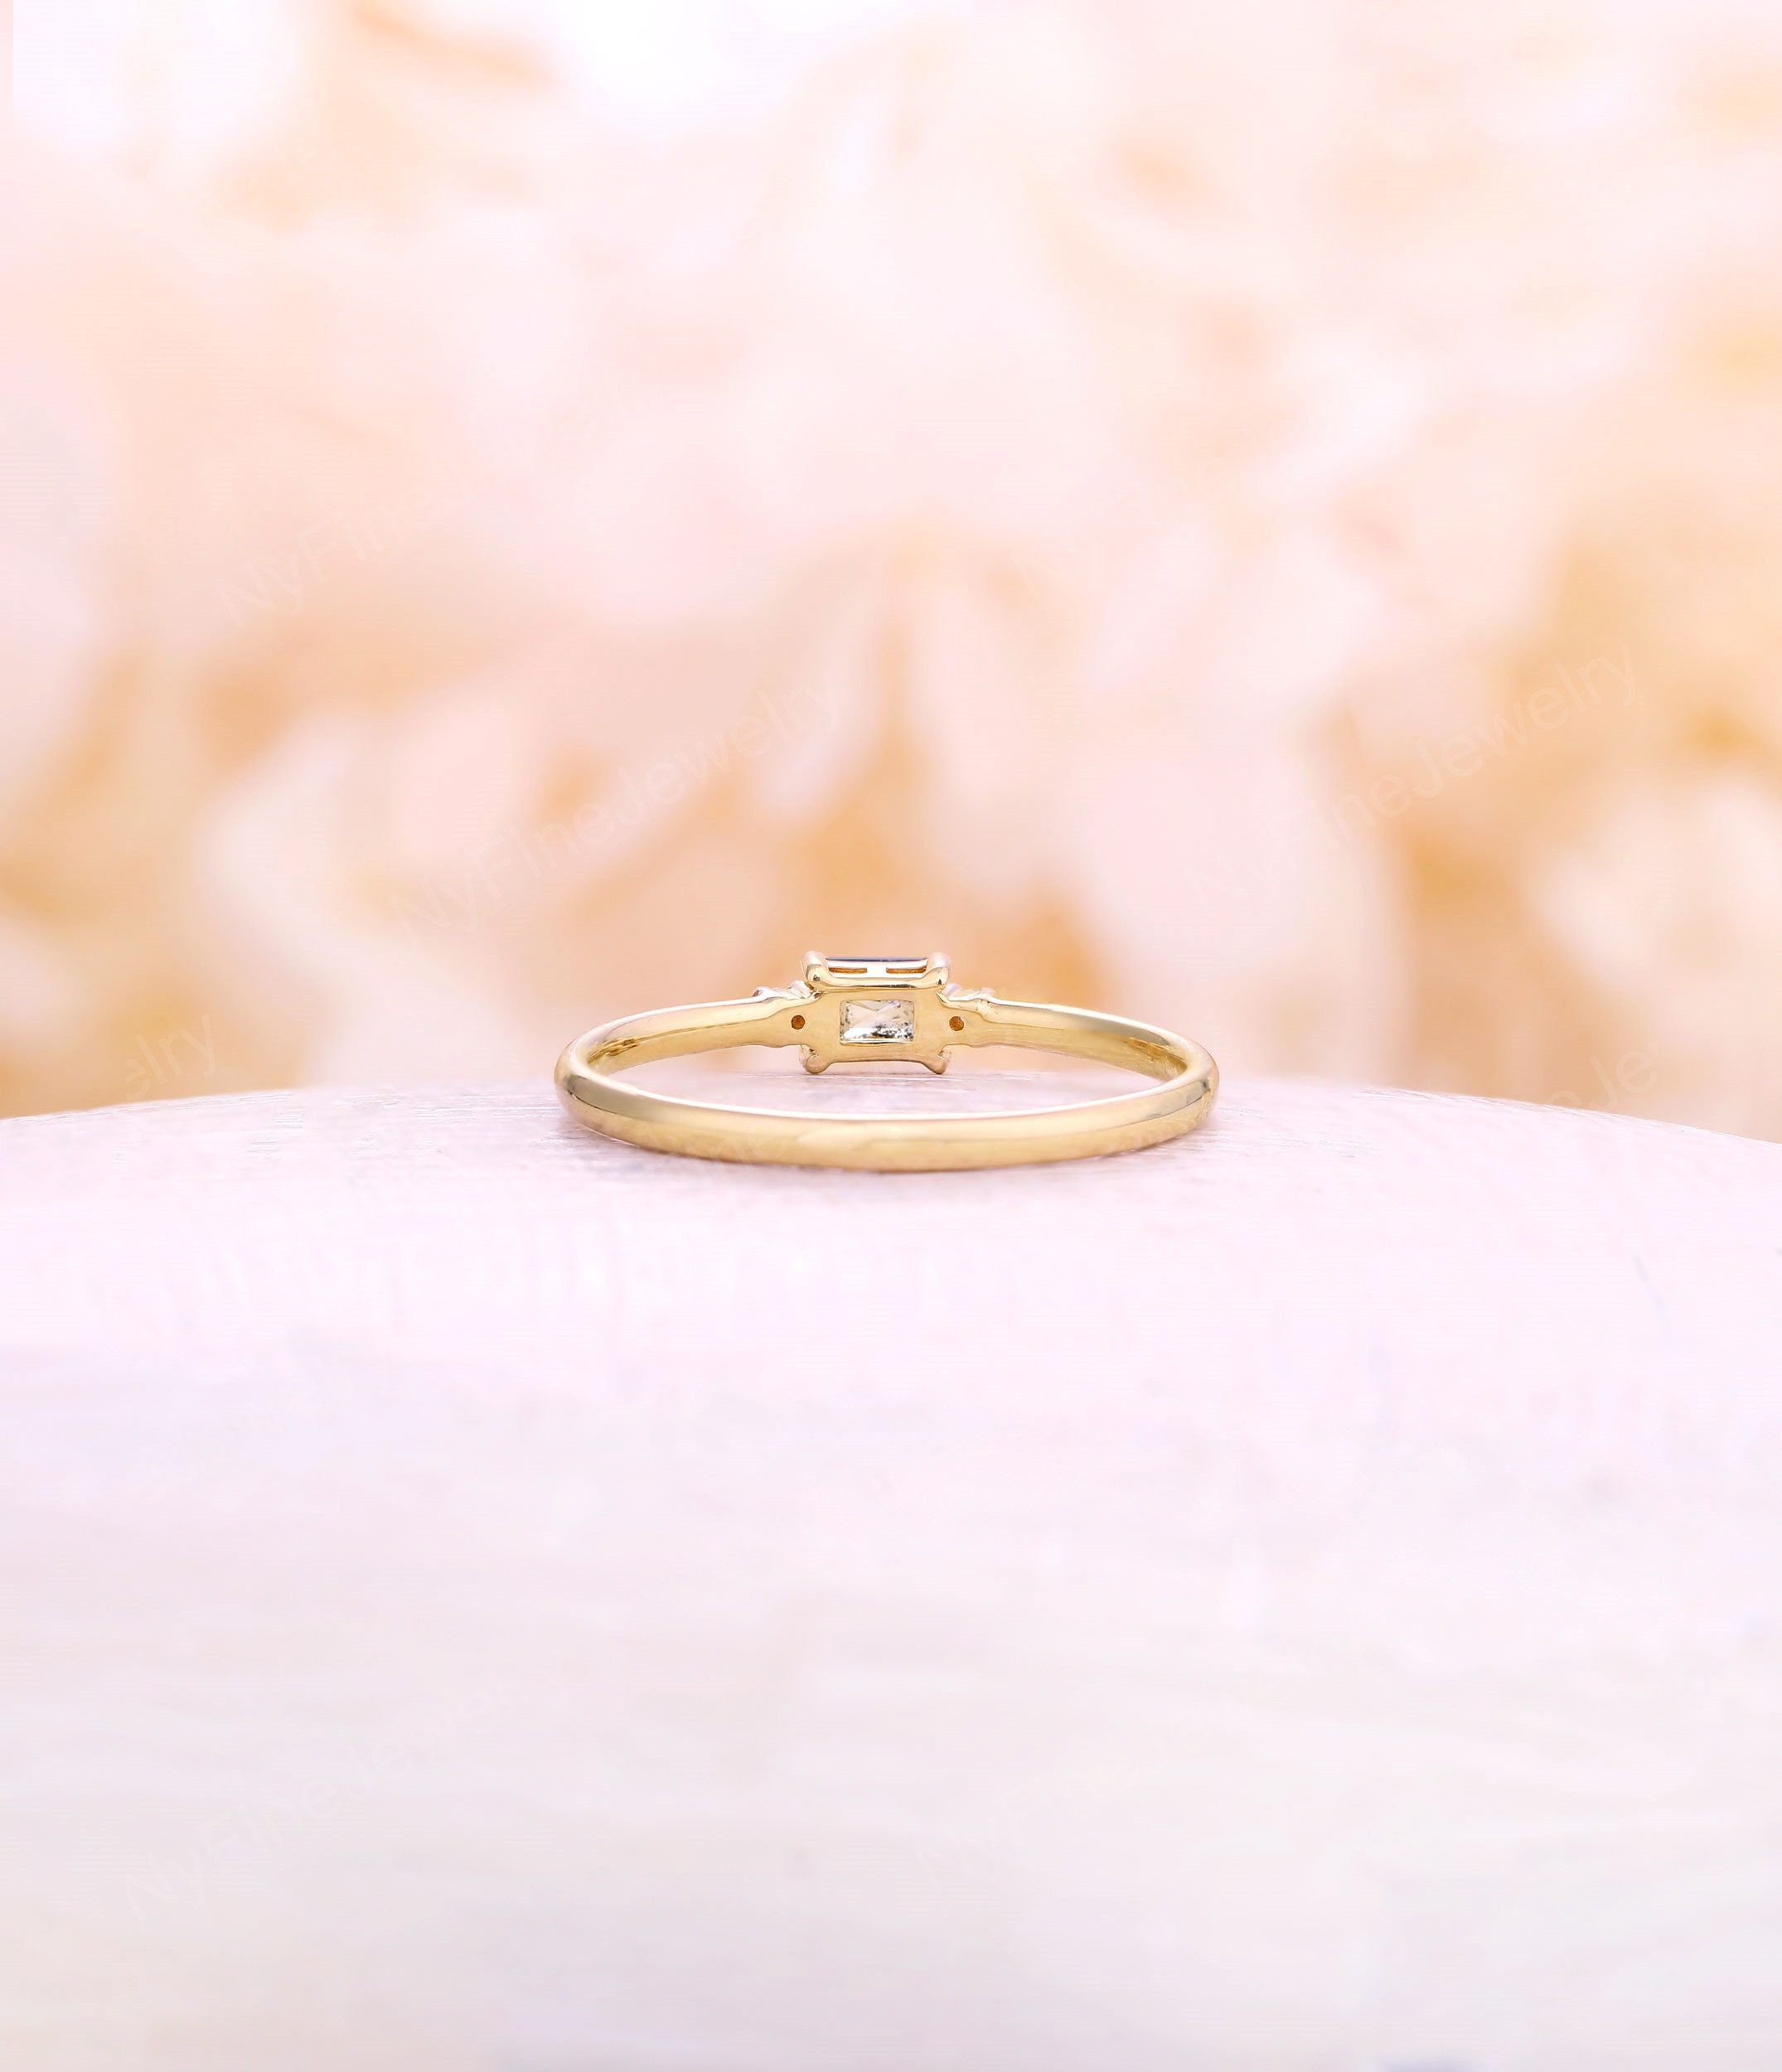 Salt and pepper diamond engagement ring emerald cut diamond | Etsy